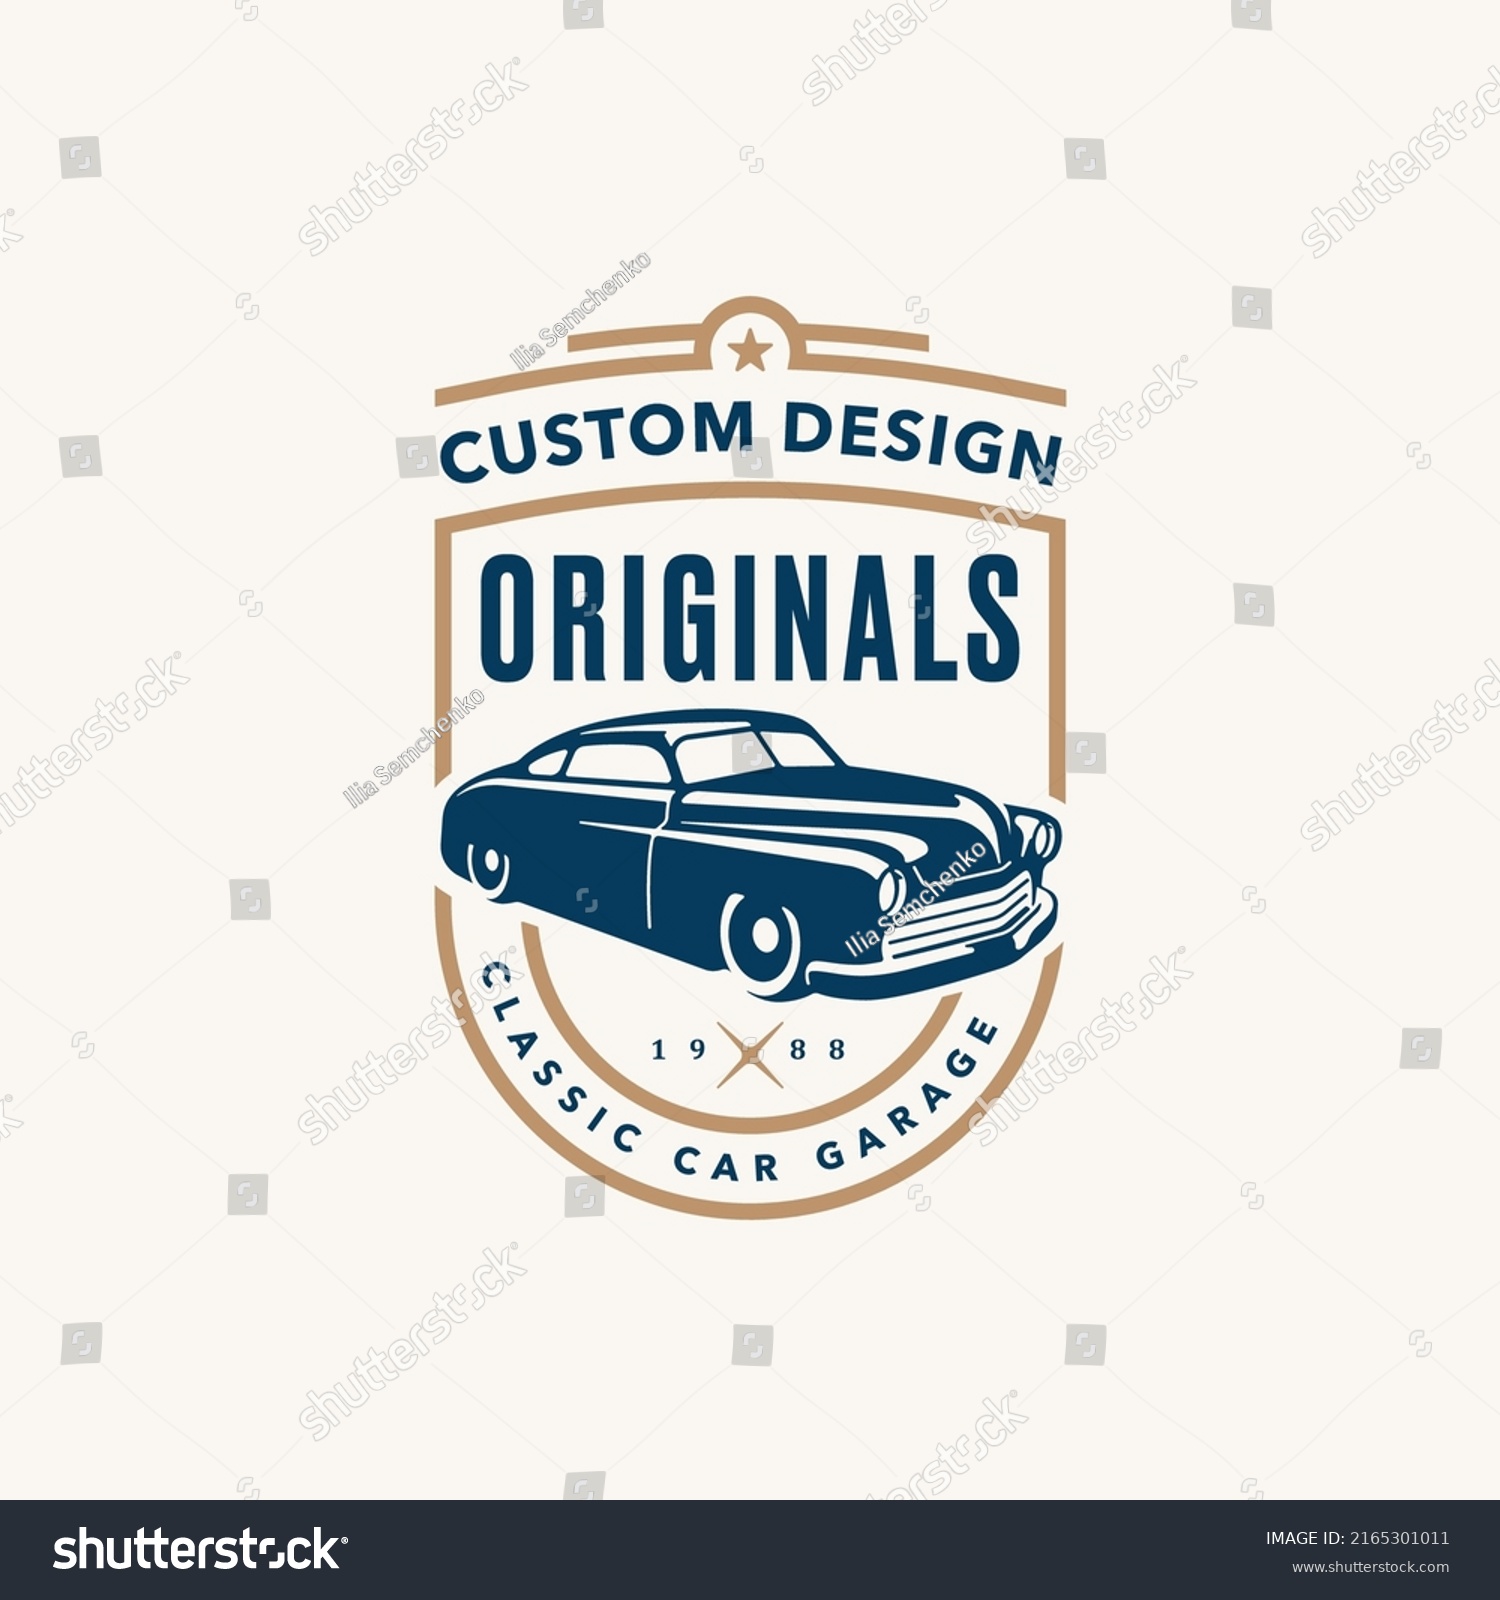 SVG of Retro car logo template. Vintage style vector illustration element for retro design label. Suitable for garage, shops, tires, car wash, car restoration, repair and racing. Hot rod classic car logo svg